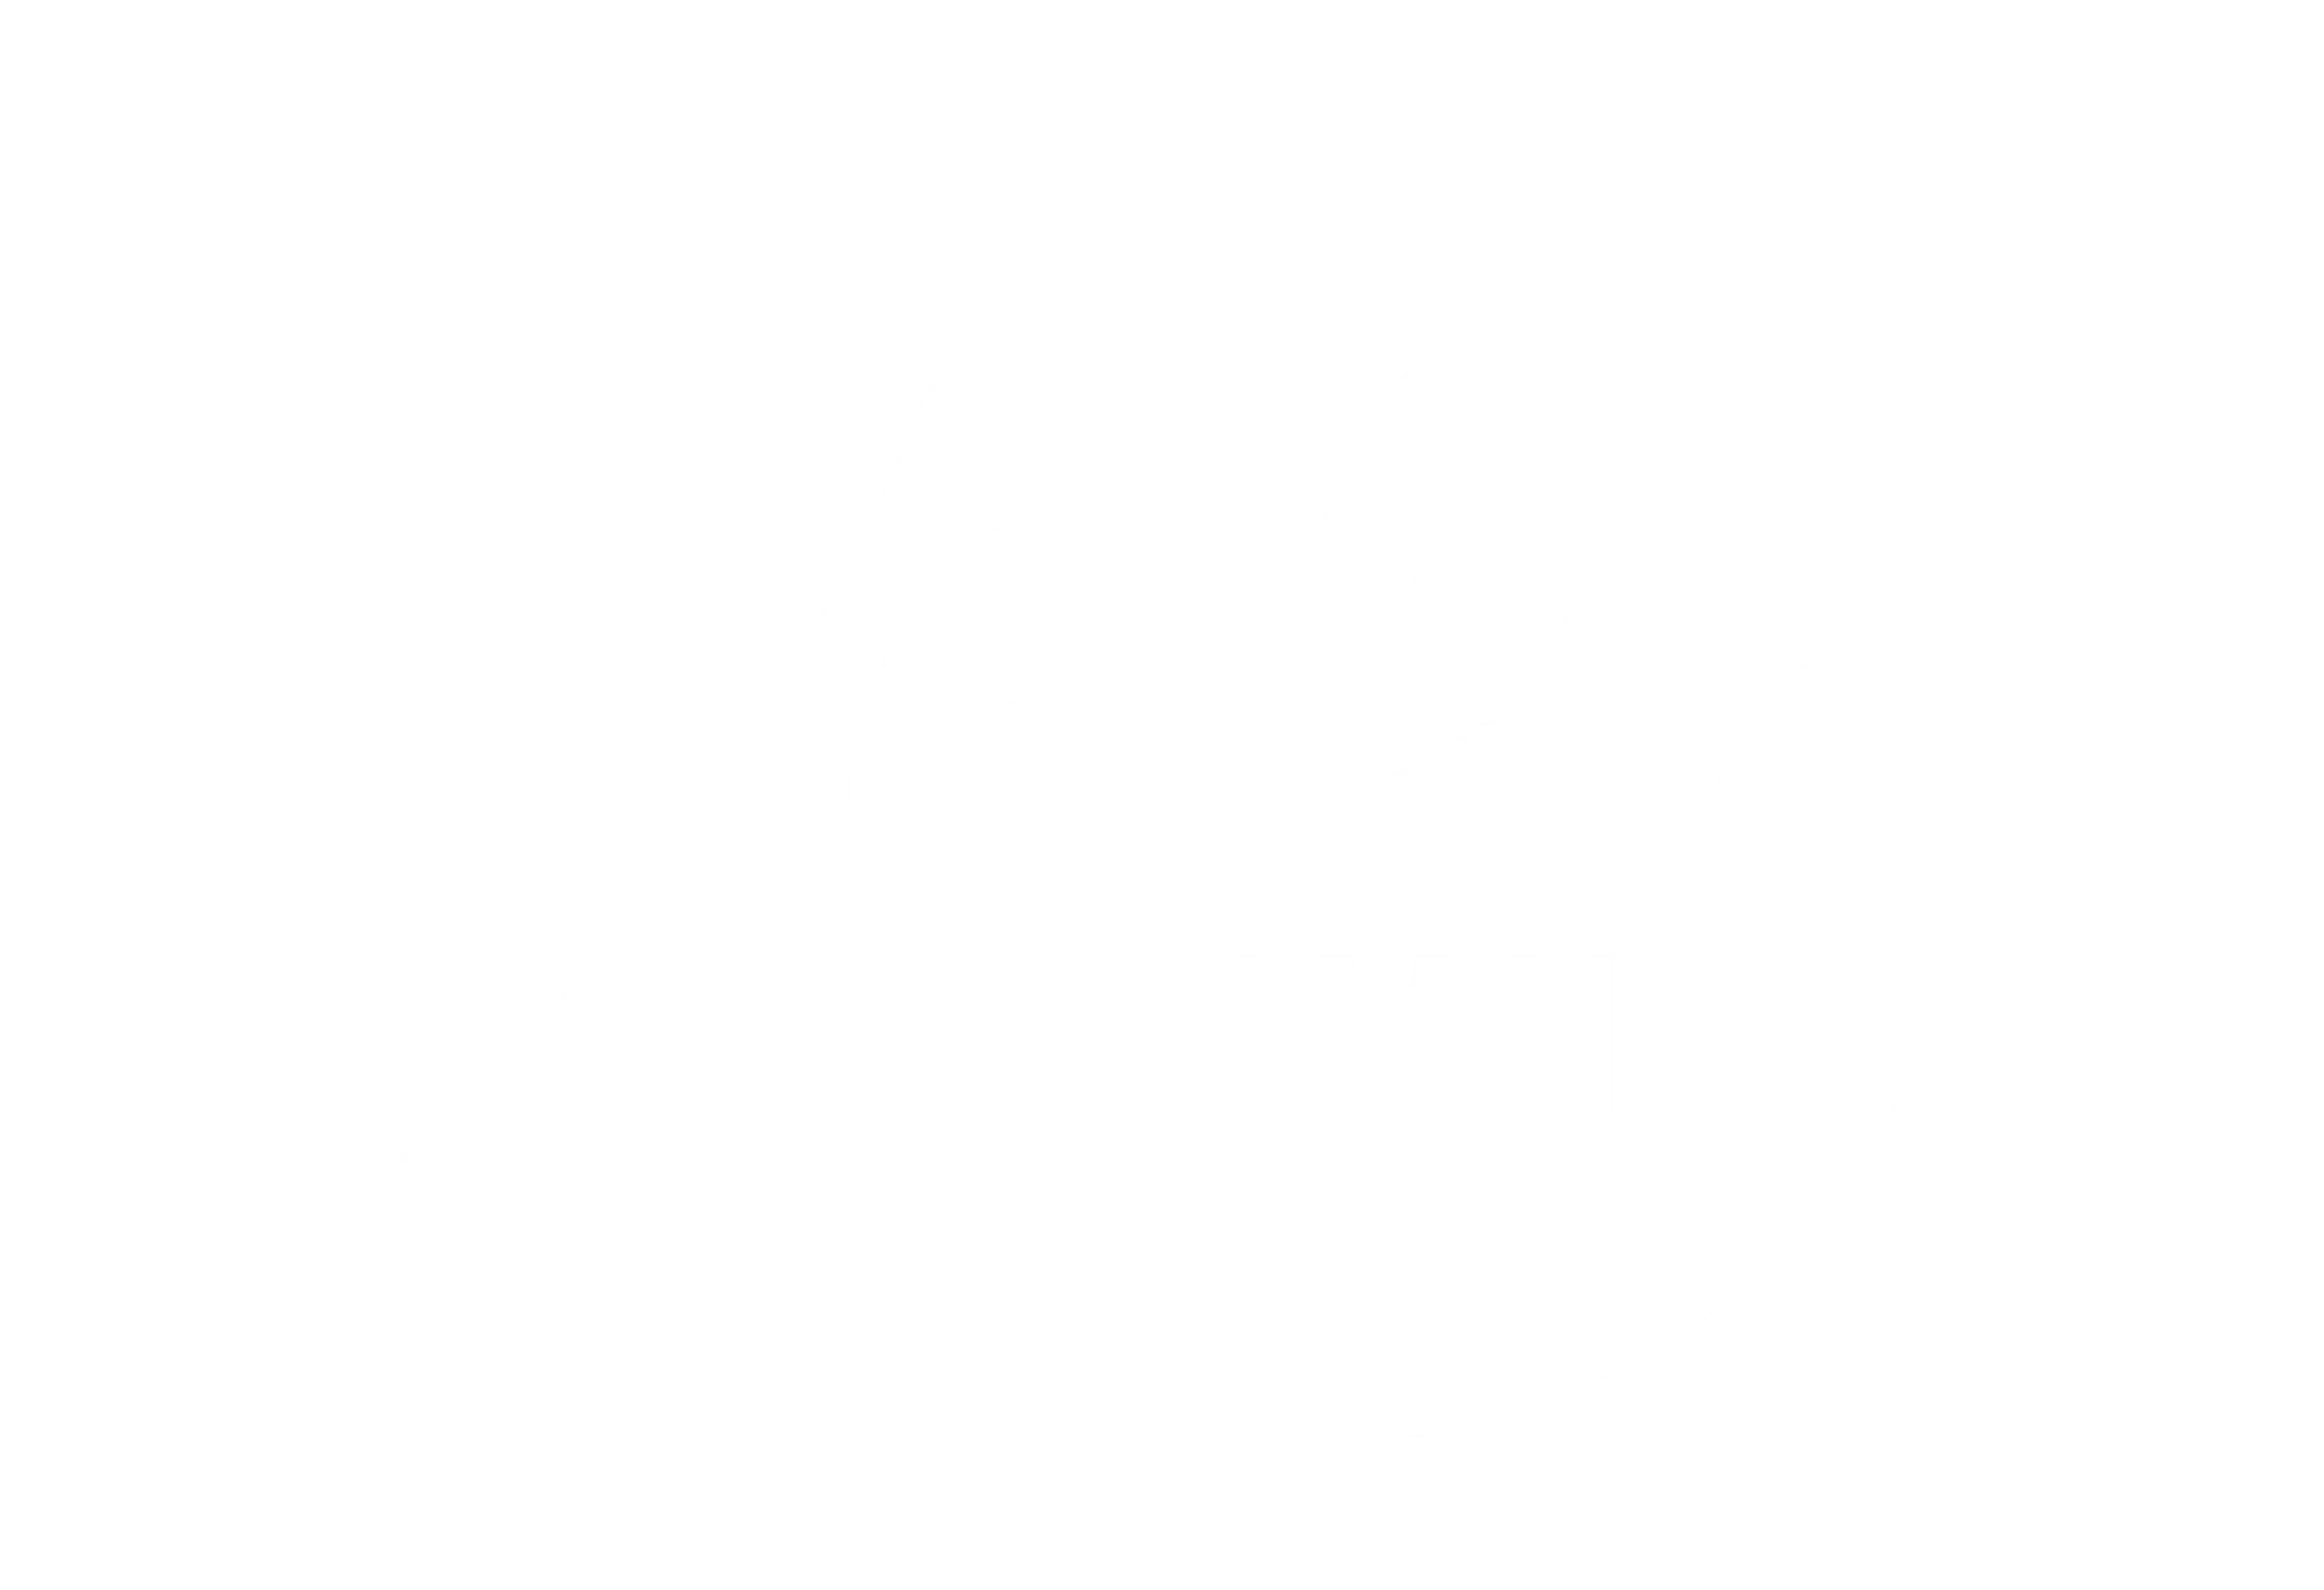 Julia Sedelmaier